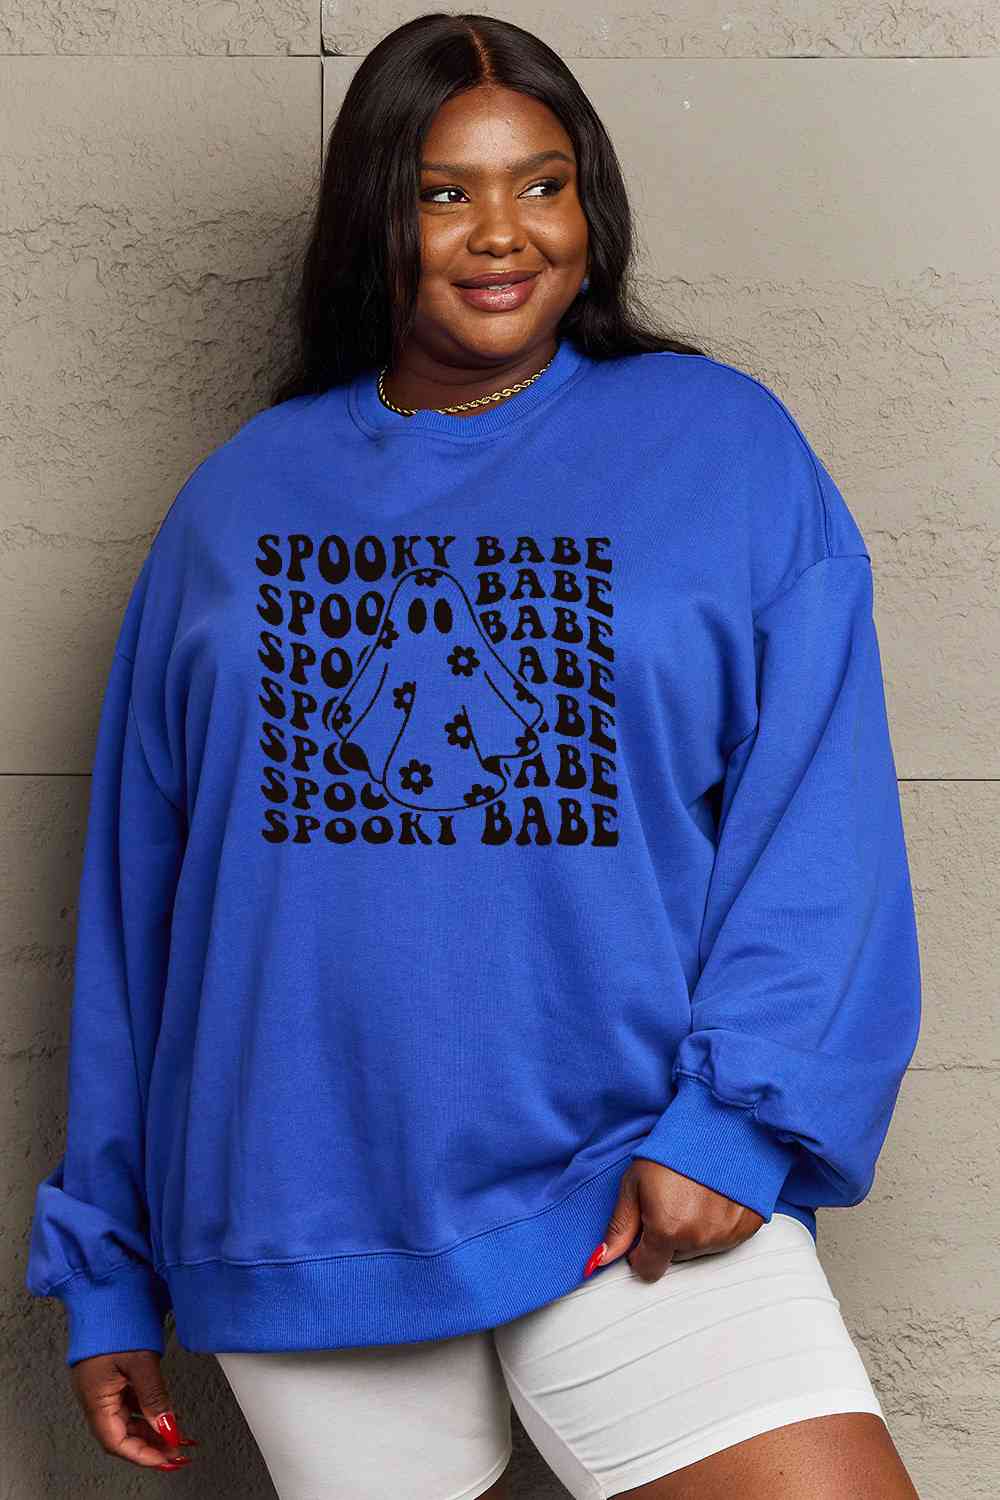 Simply Love Full Size SPOOKY BABE Graphic Sweatshirt, MyriadMart